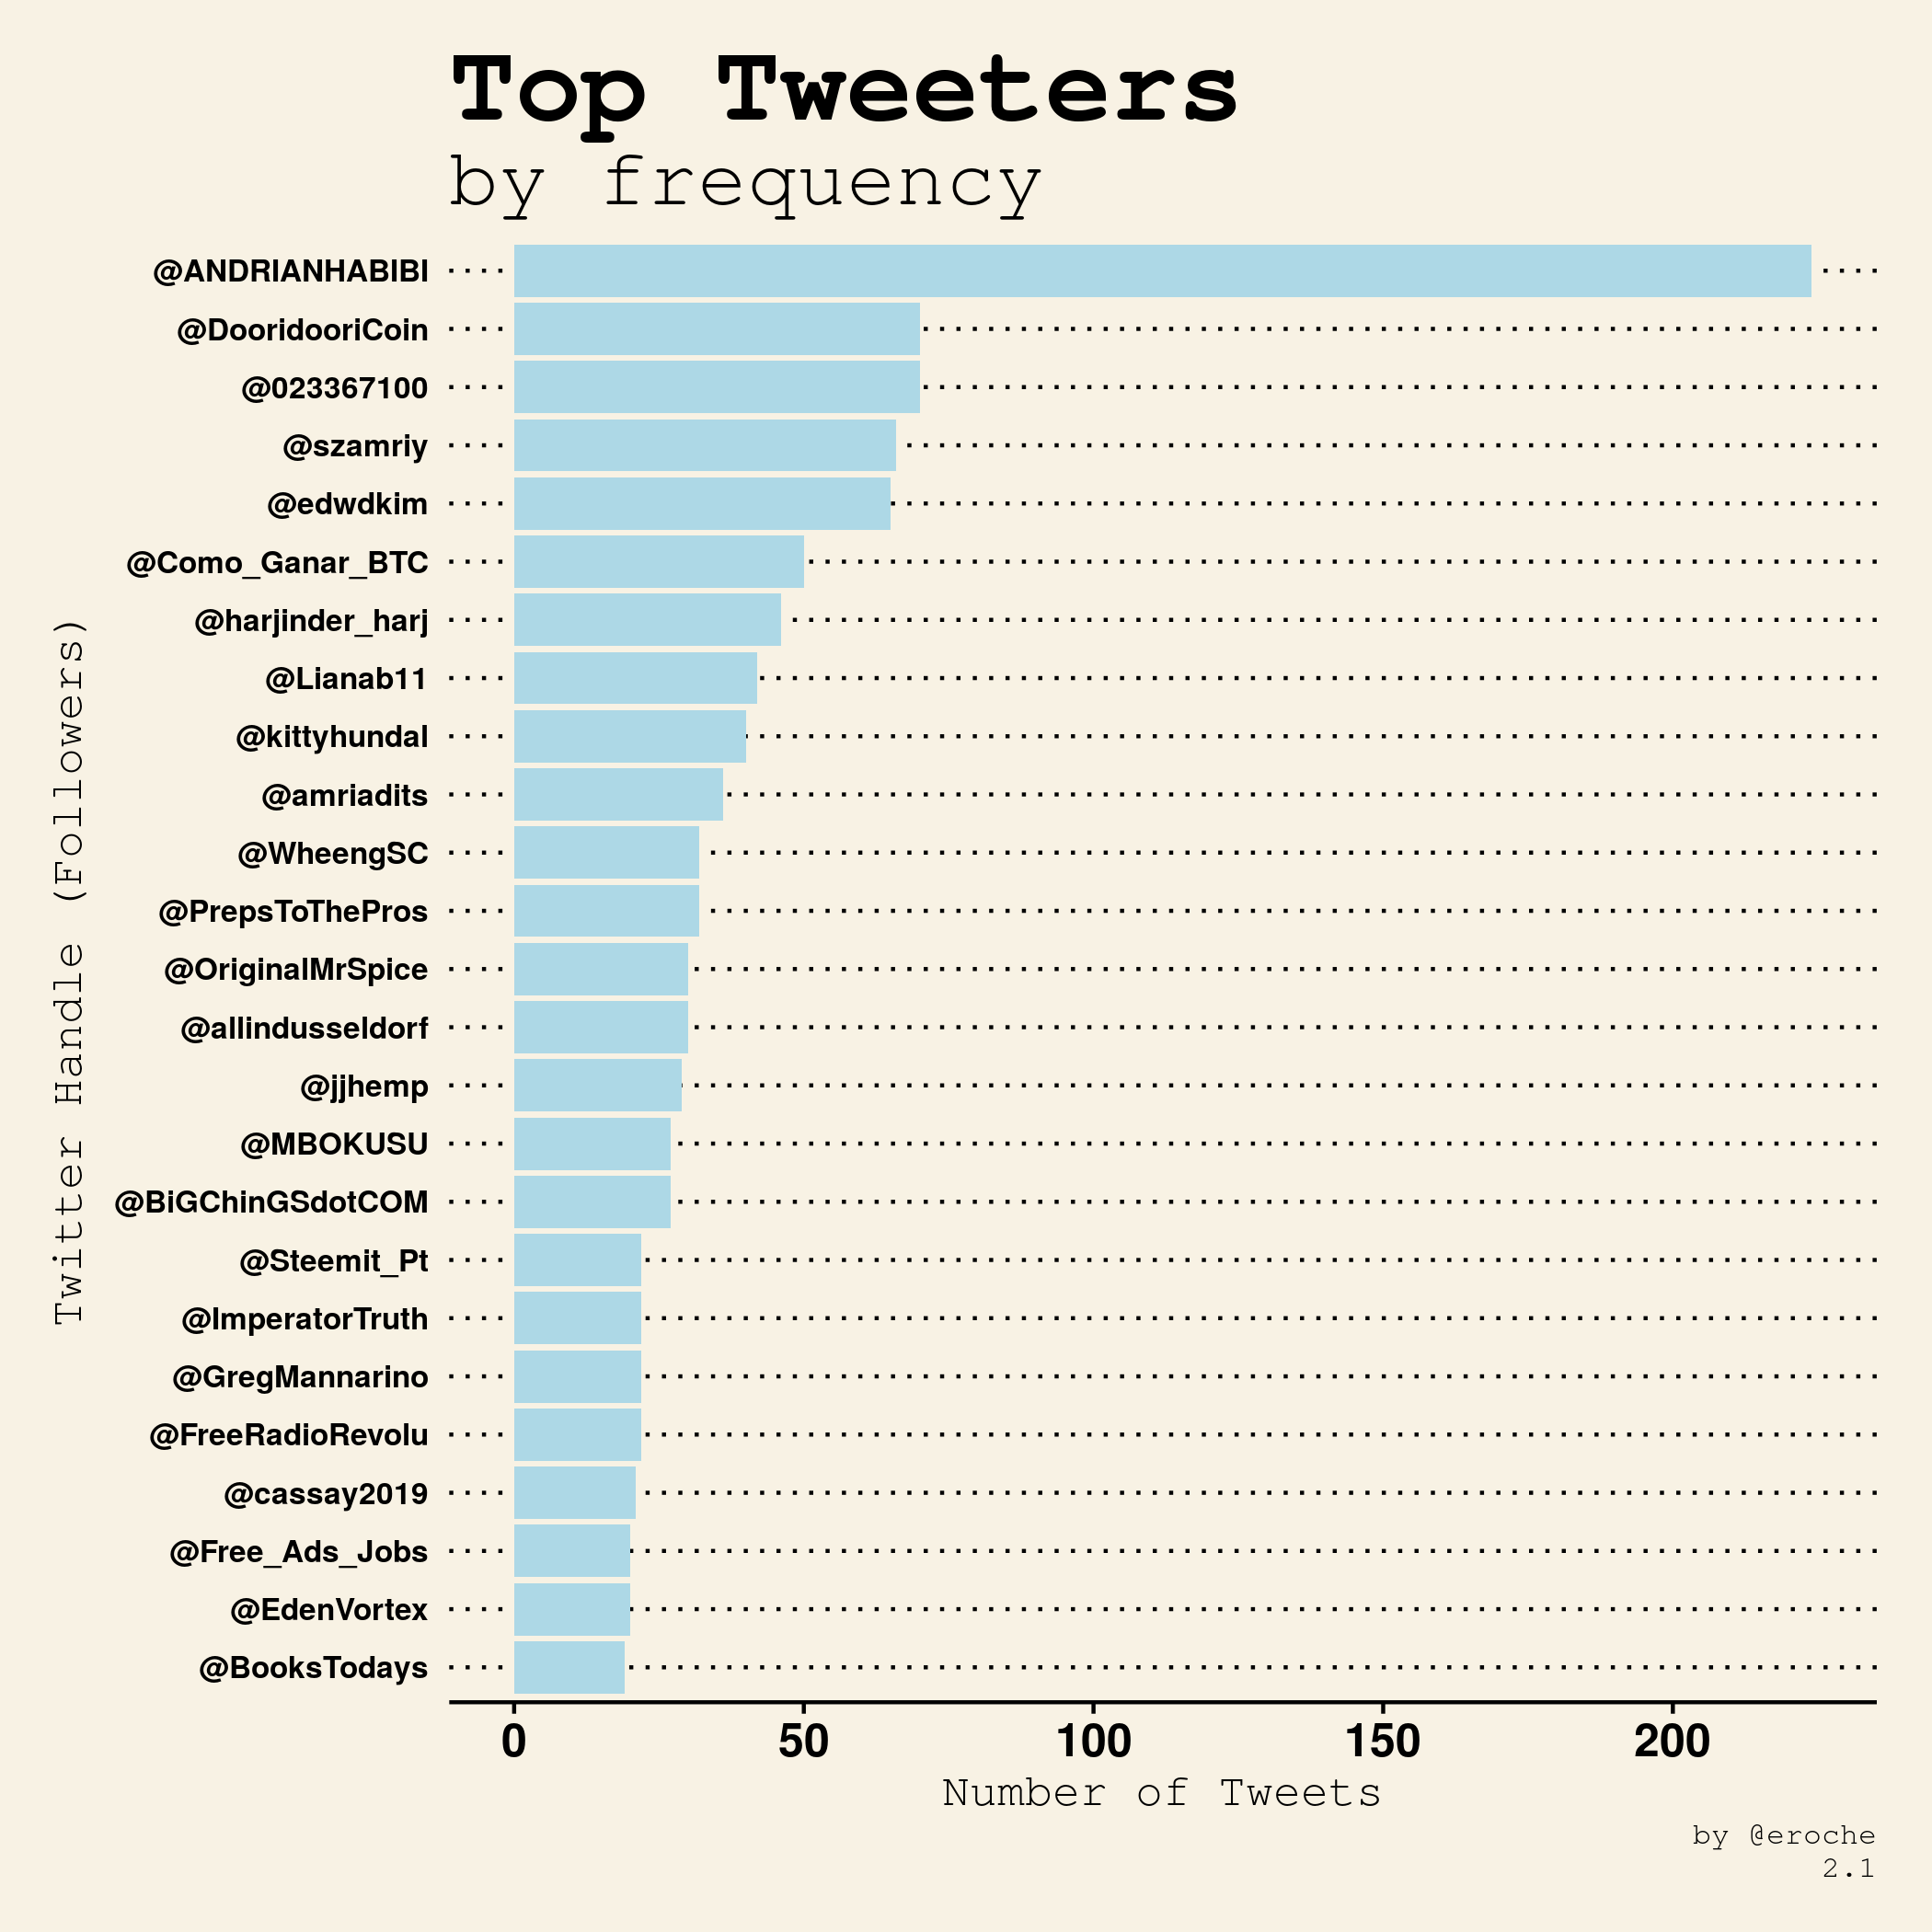 Top Tweeters by frequency_2.1.png